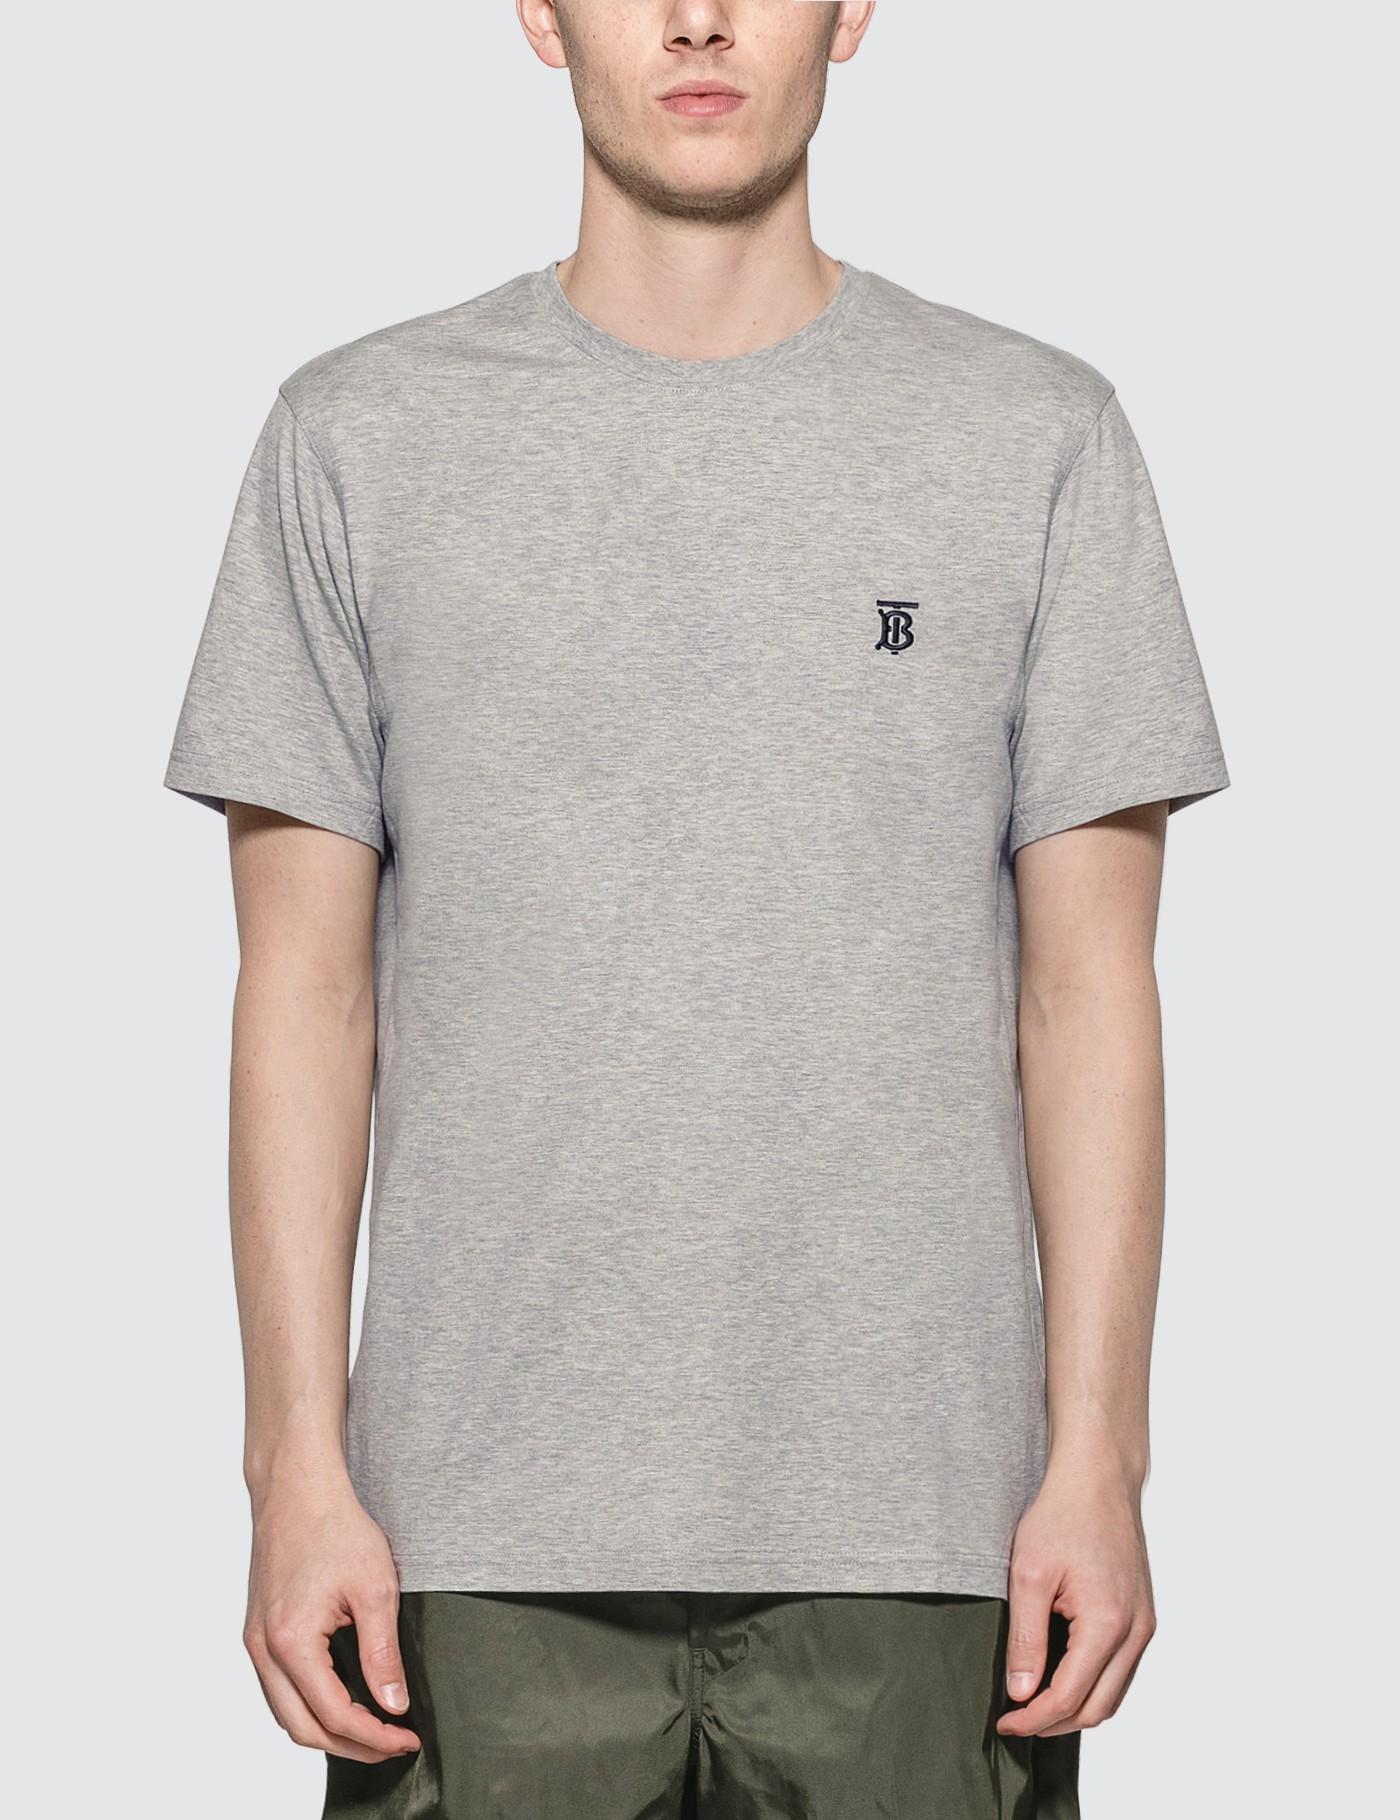 Burberry Monogram Motif Cotton T-shirt in Grey (Gray) for Men - Lyst